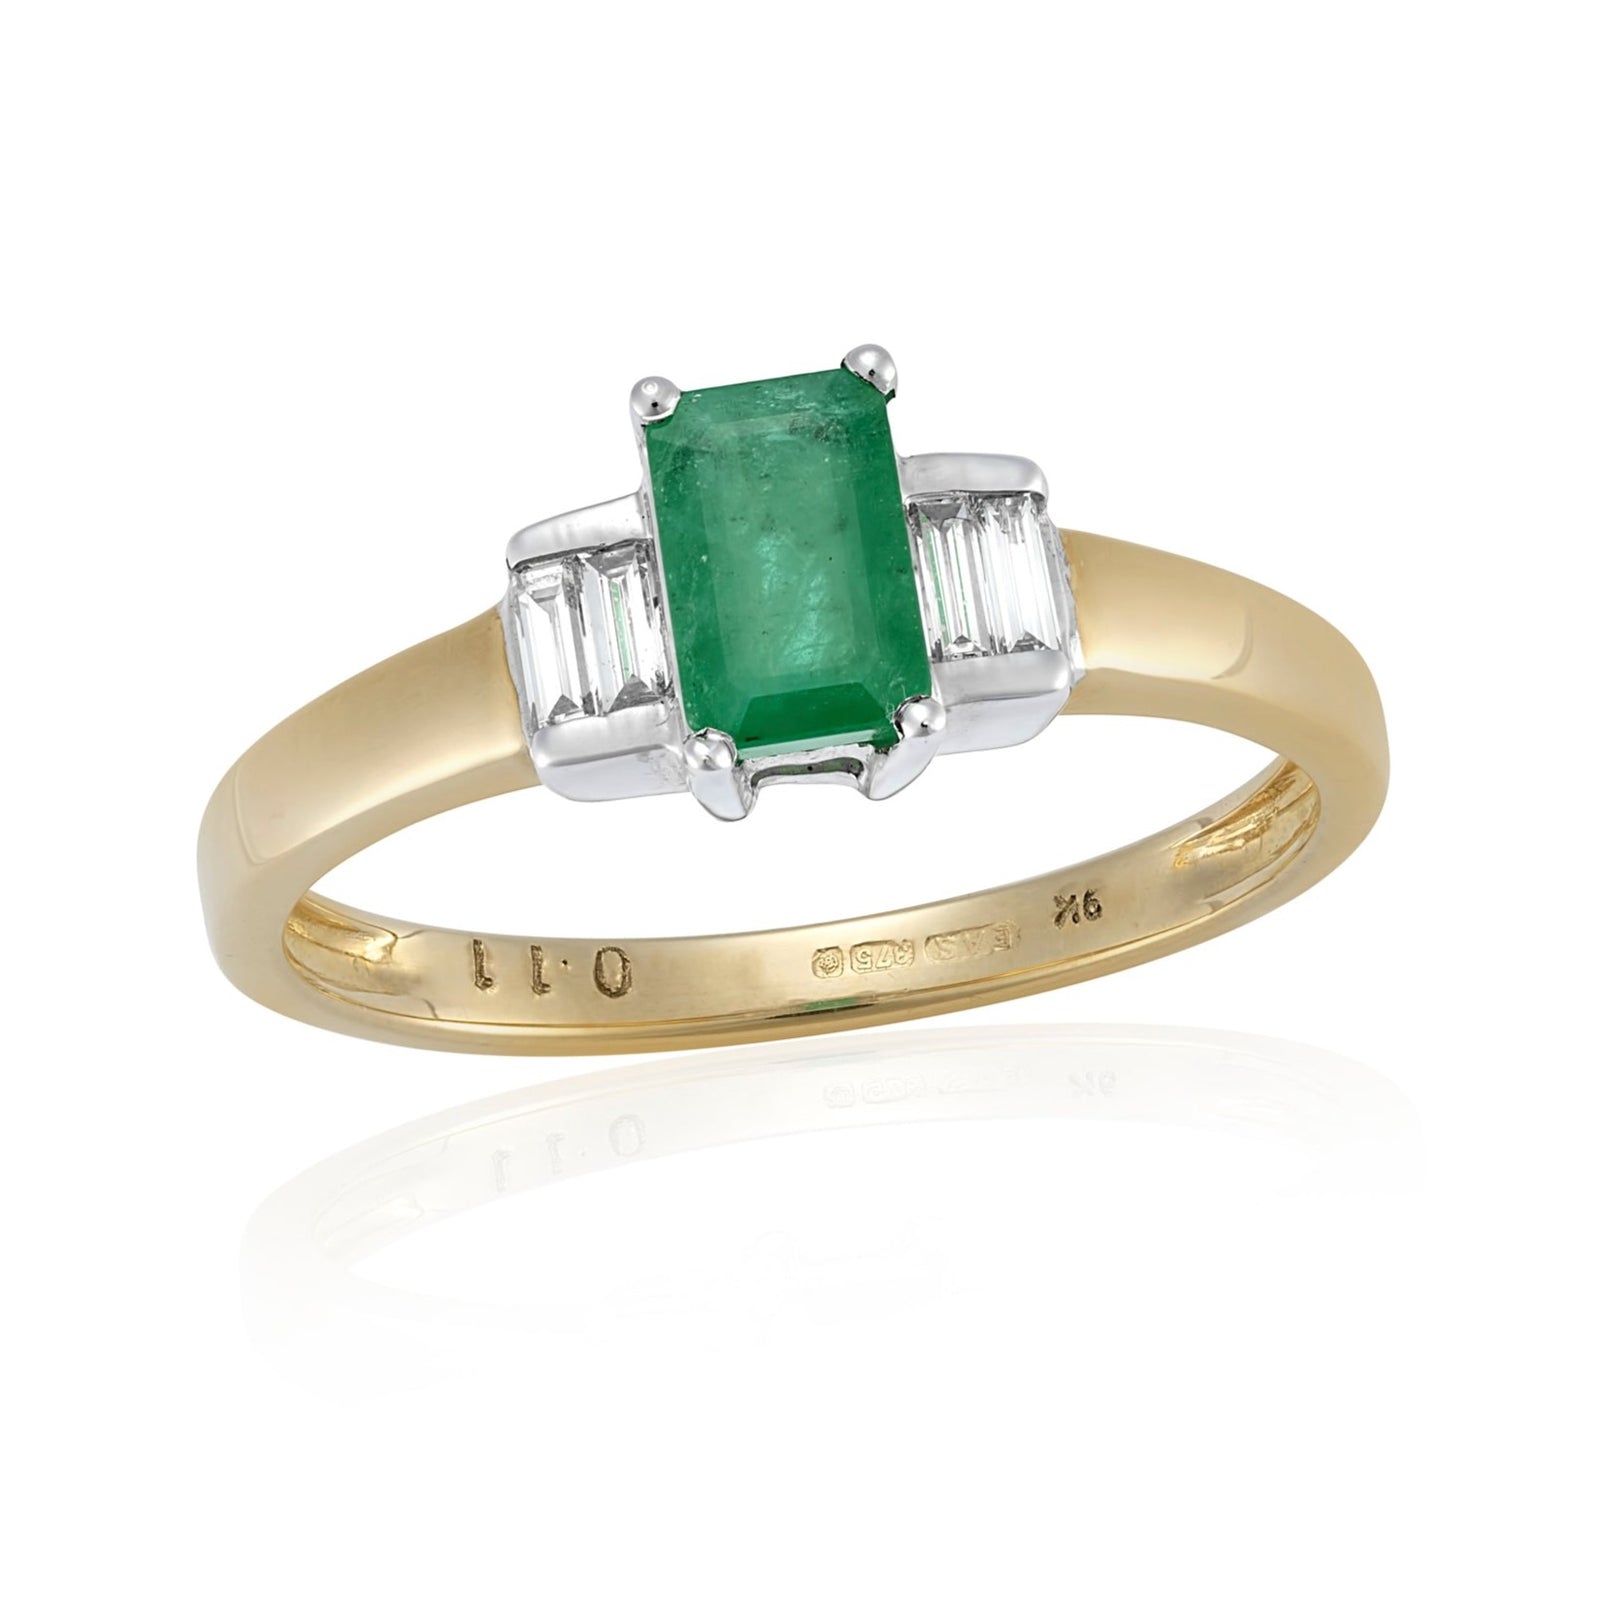 9ct gold 6x4mm octagon cut emerald & baguette cut diamonds ring 0.11ct